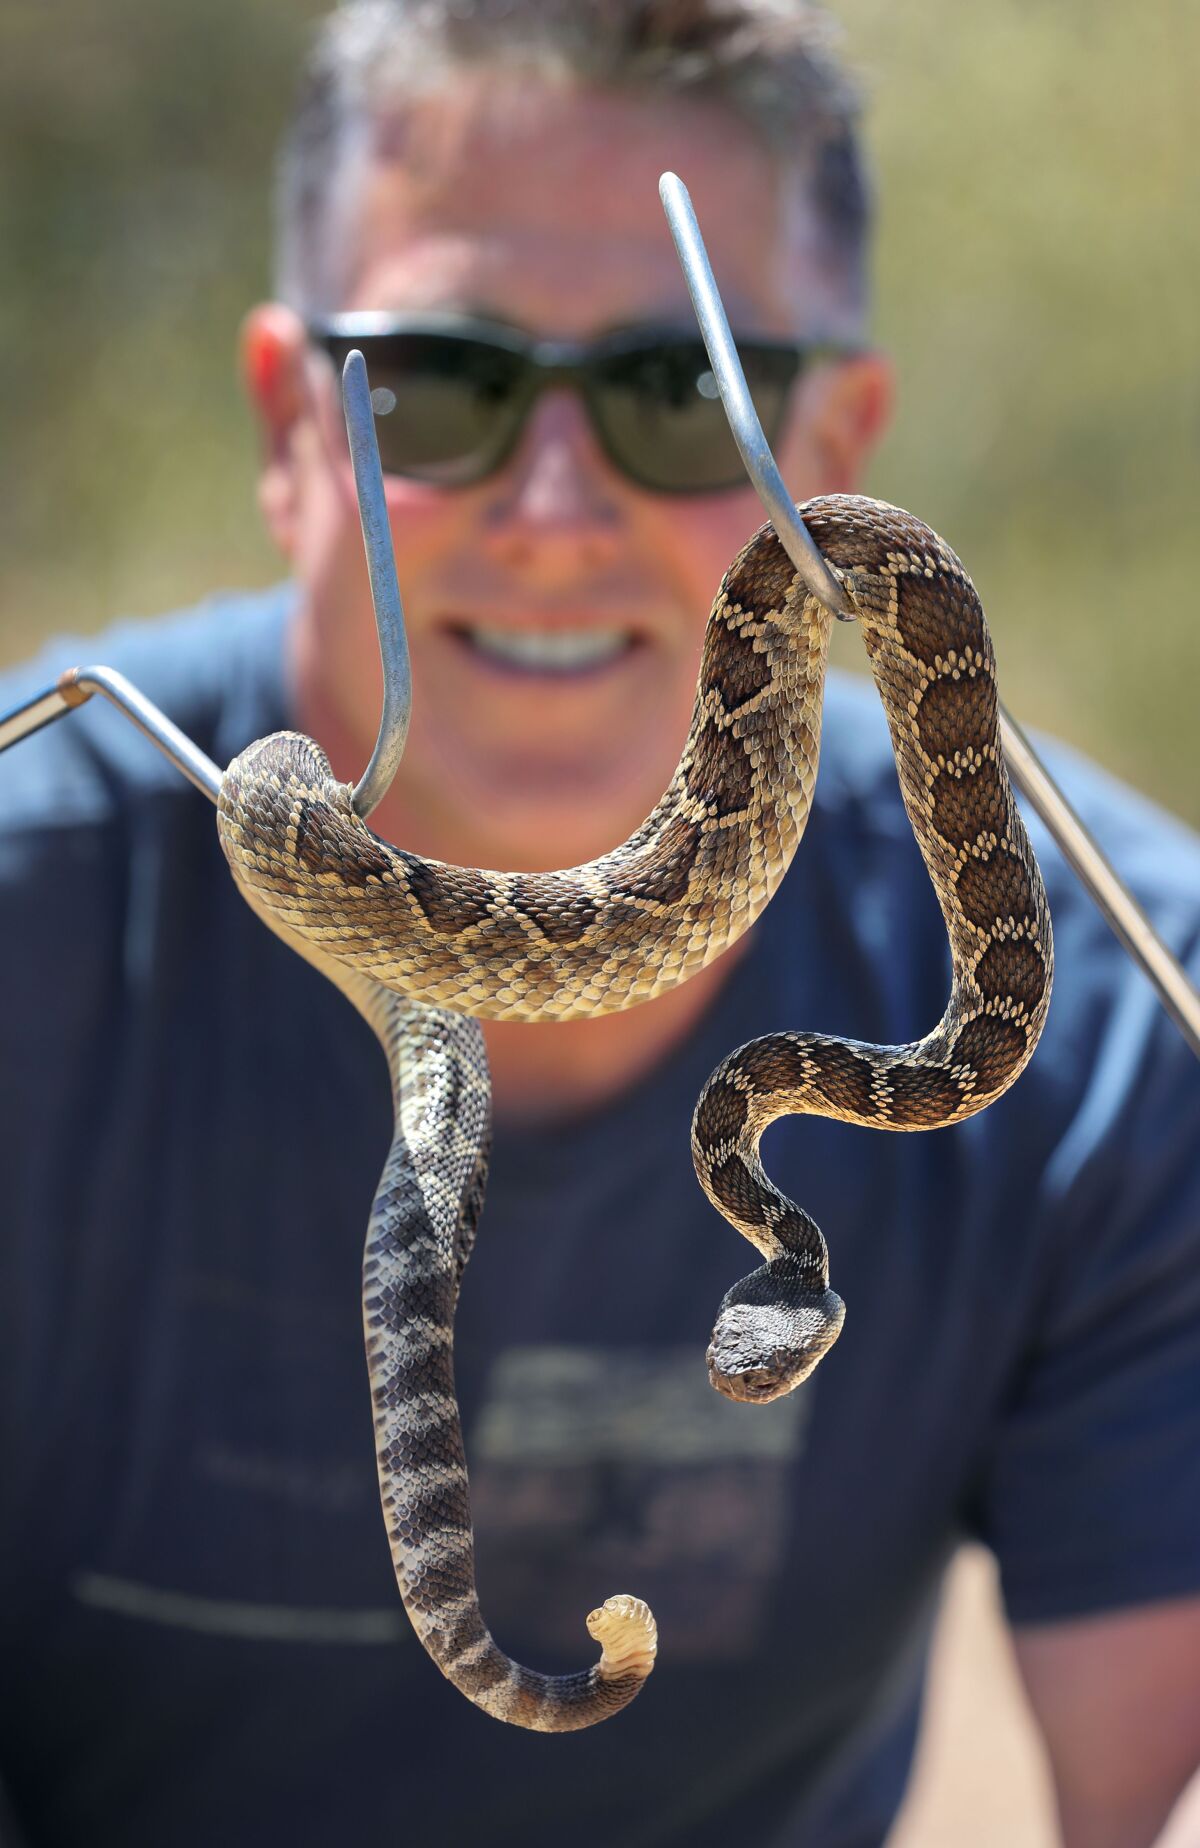 Bruce Ireland gently holds a rattlesnake on two metal hooks.